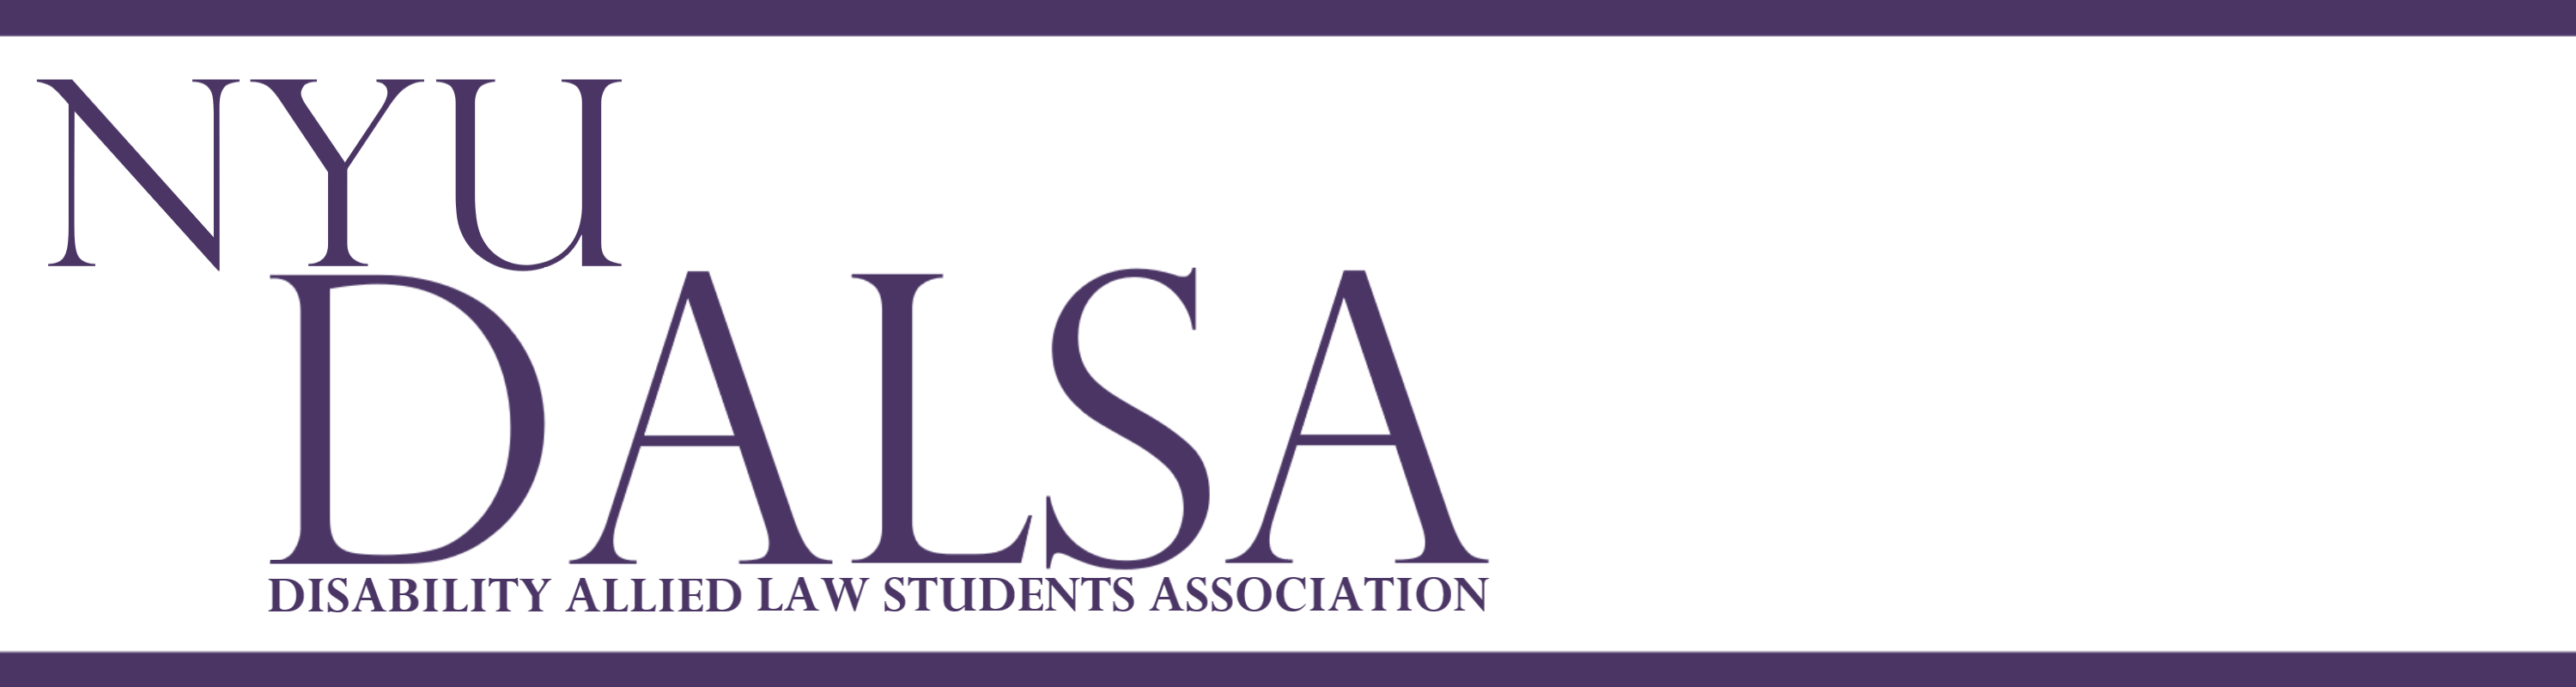 NYU DALSA Disability Allied Law Students Association